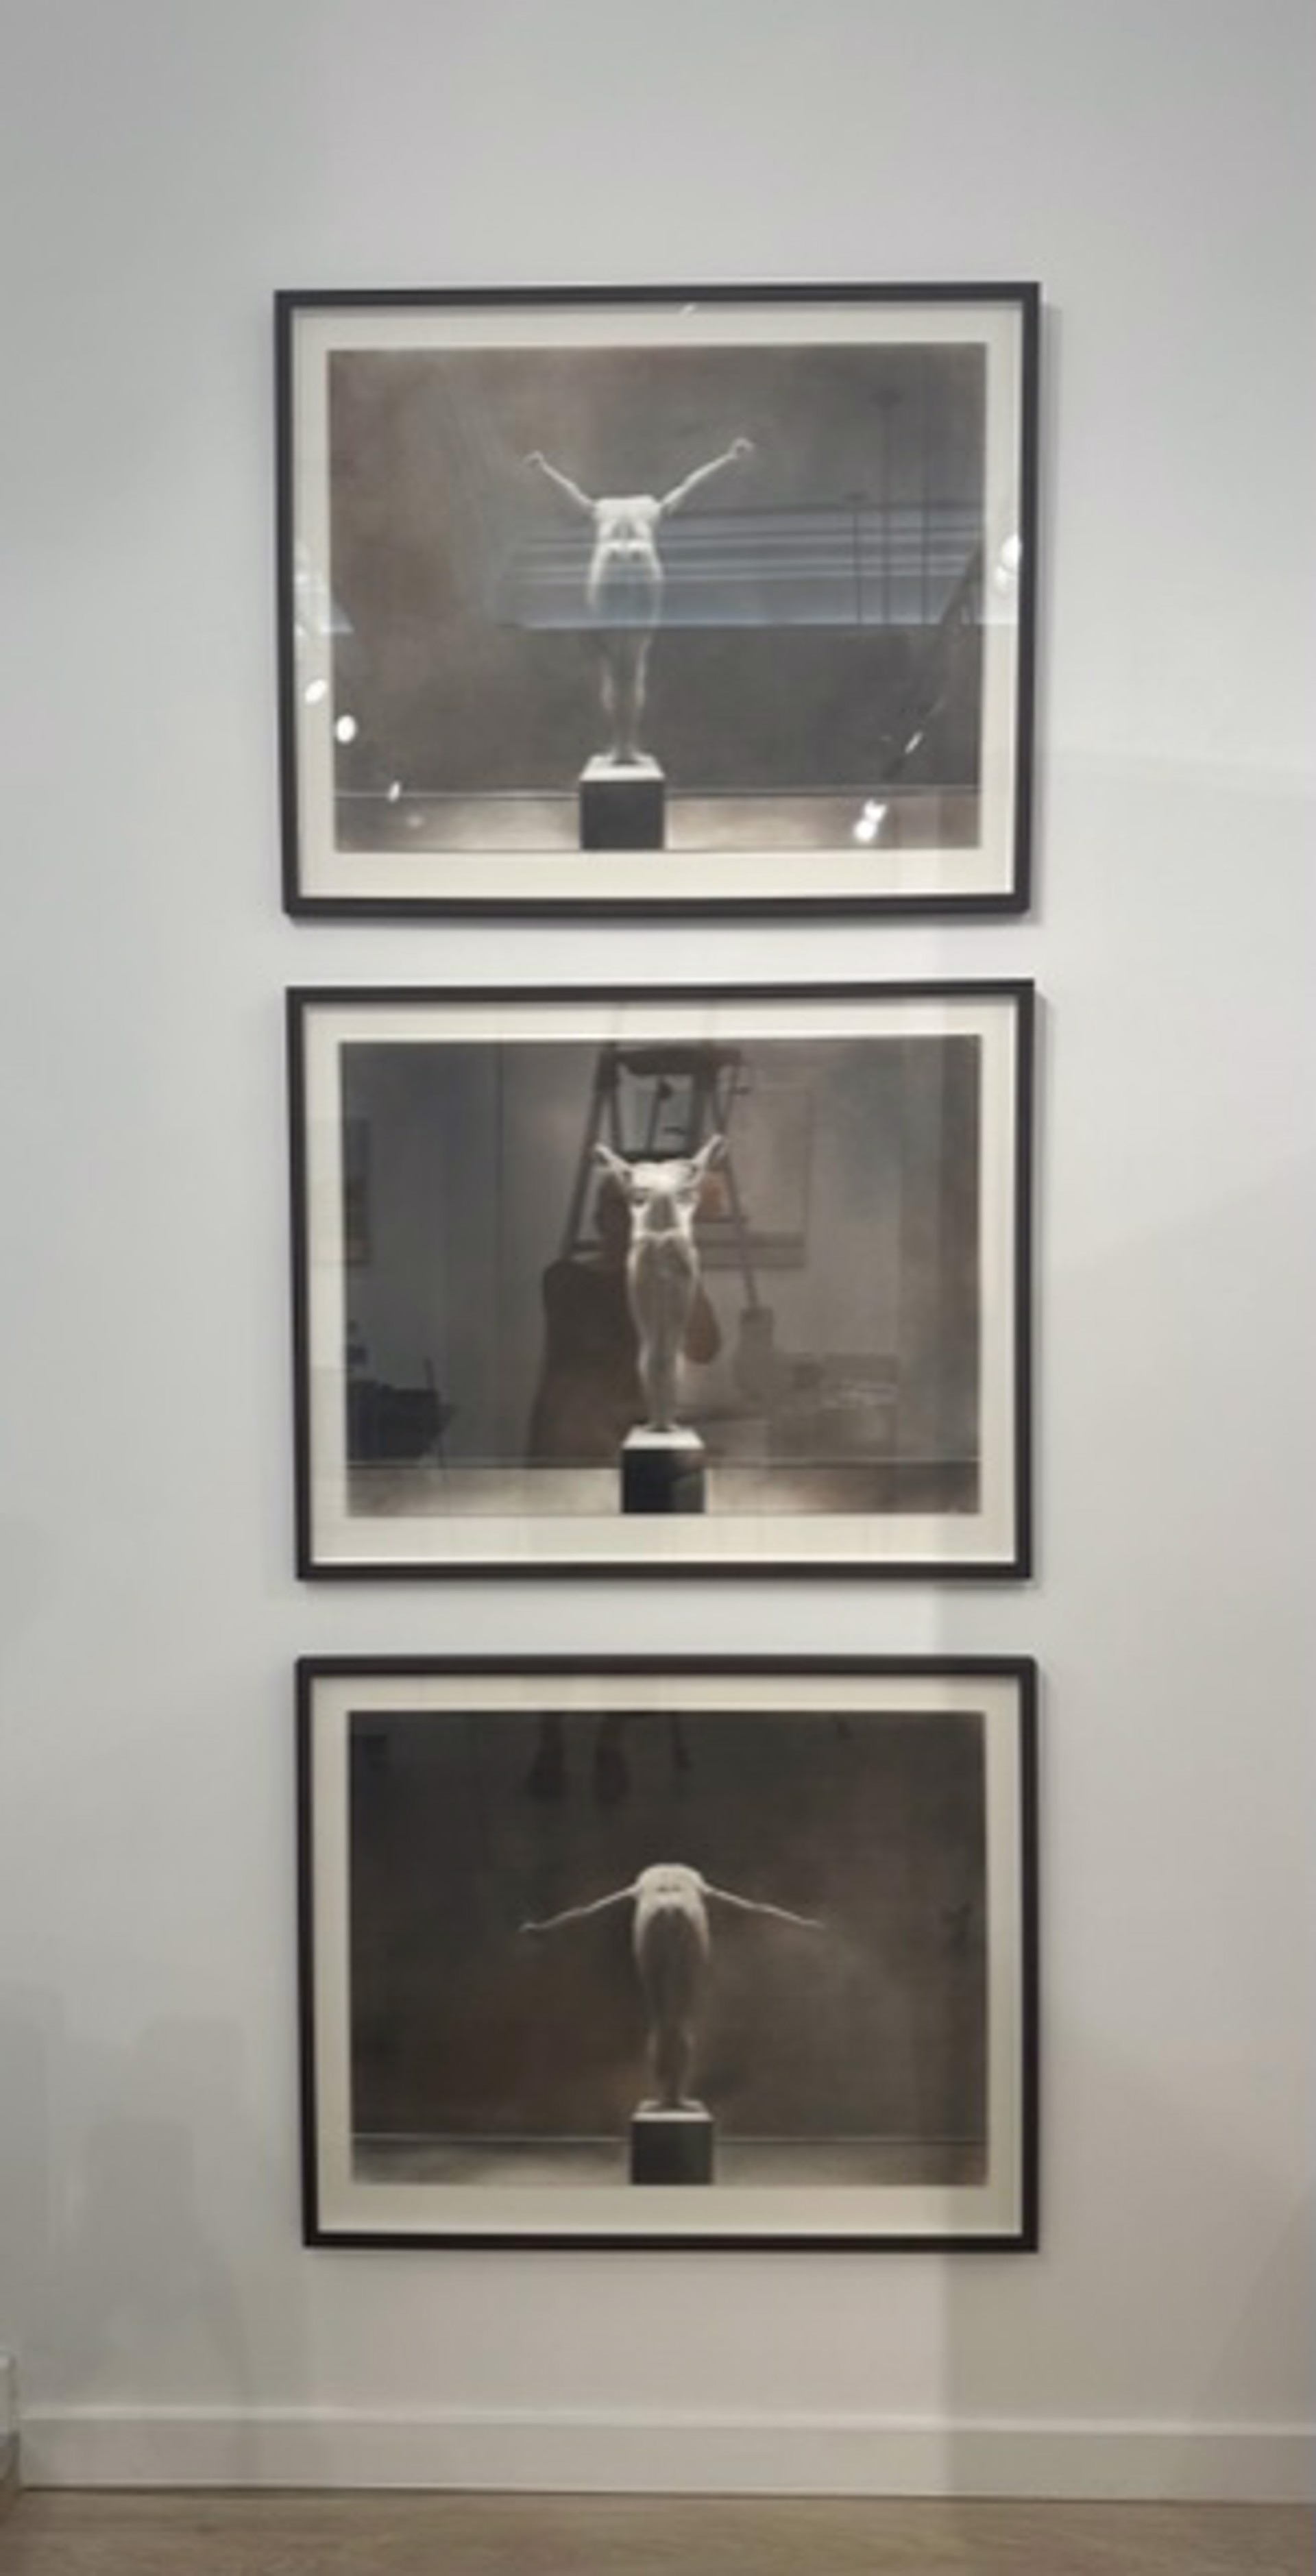 Untitled triptych - three figurative drawings by Stephen Namara